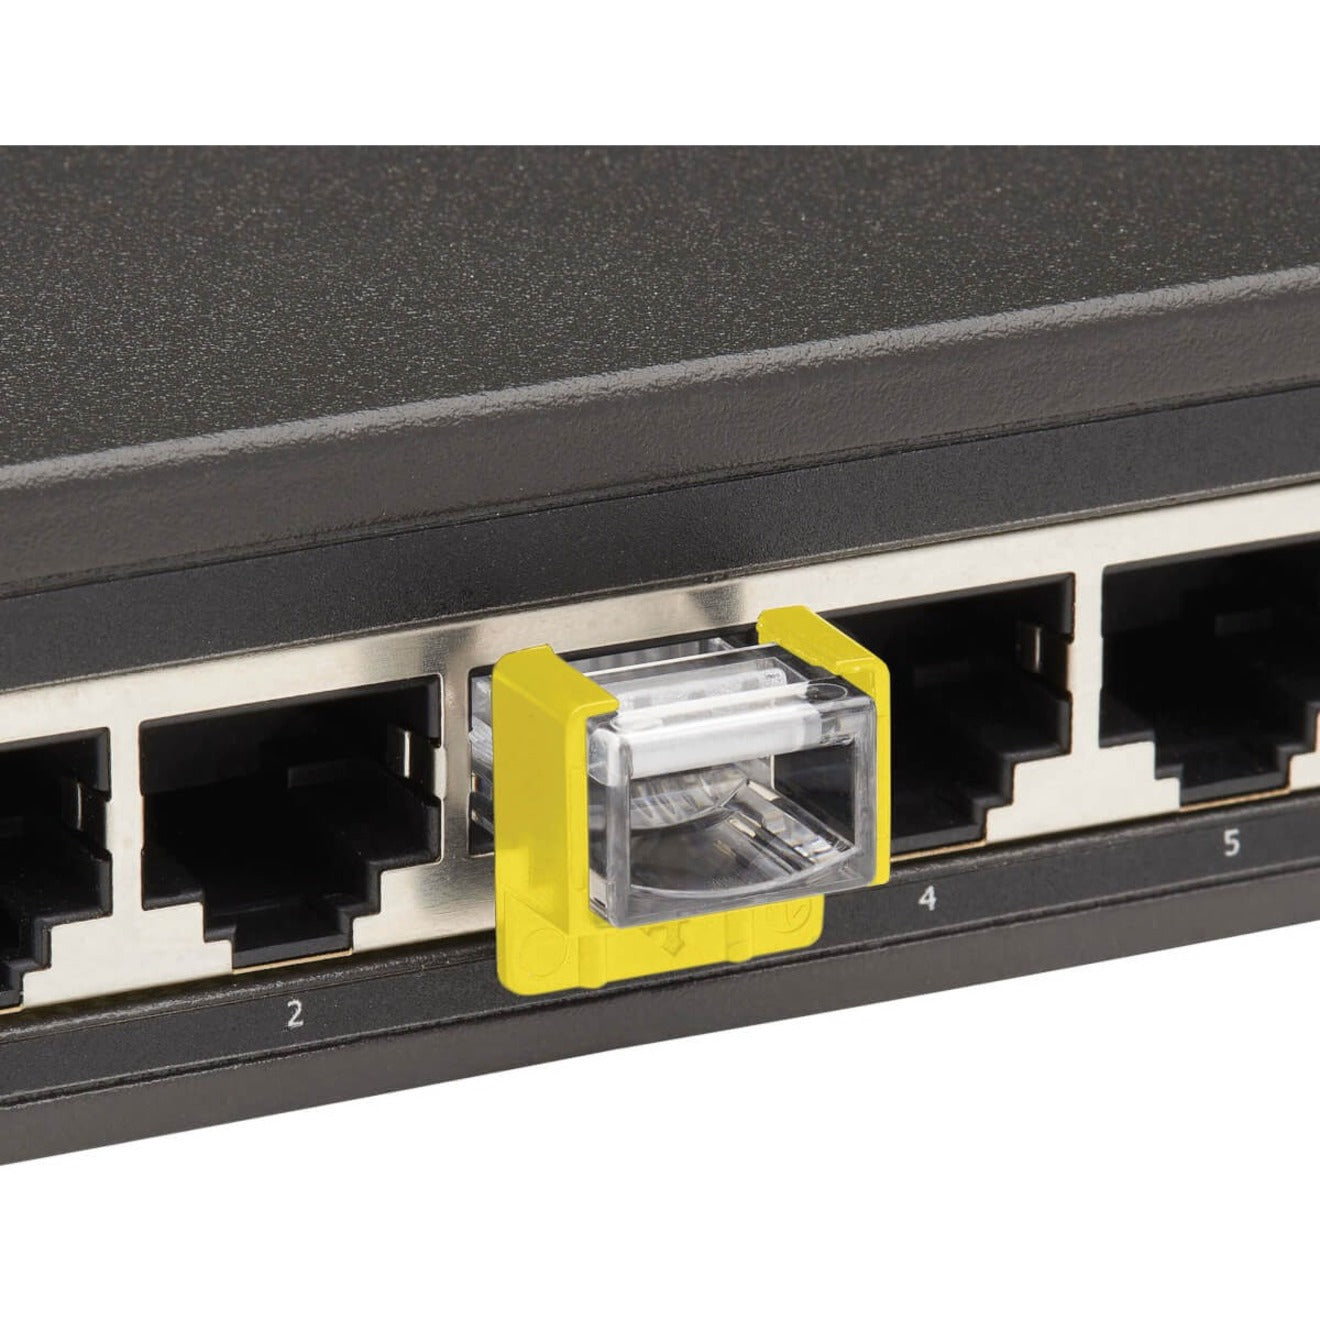 Tripp Lite N2LPLUG-010-YW Universal RJ45 Locking Inserts, Yellow, 10 Pack - Easy-to-Install Networking Solution